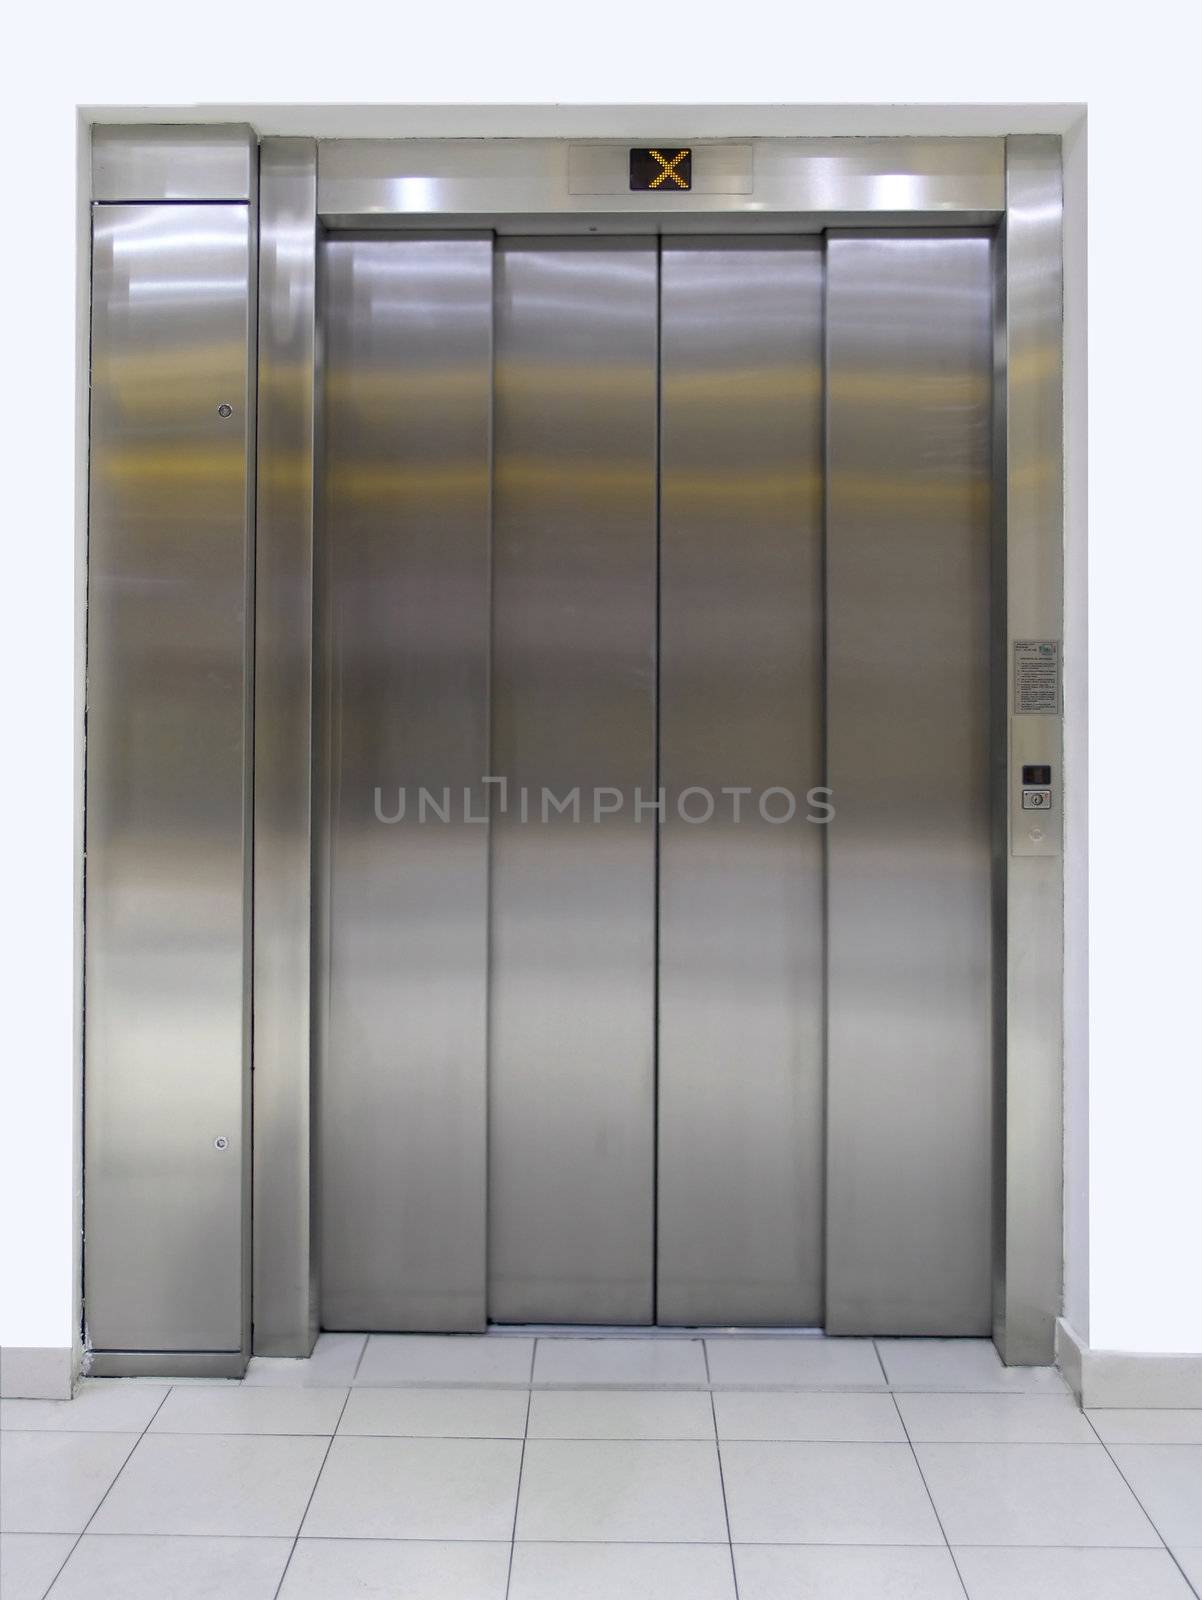 Elevator with close doors